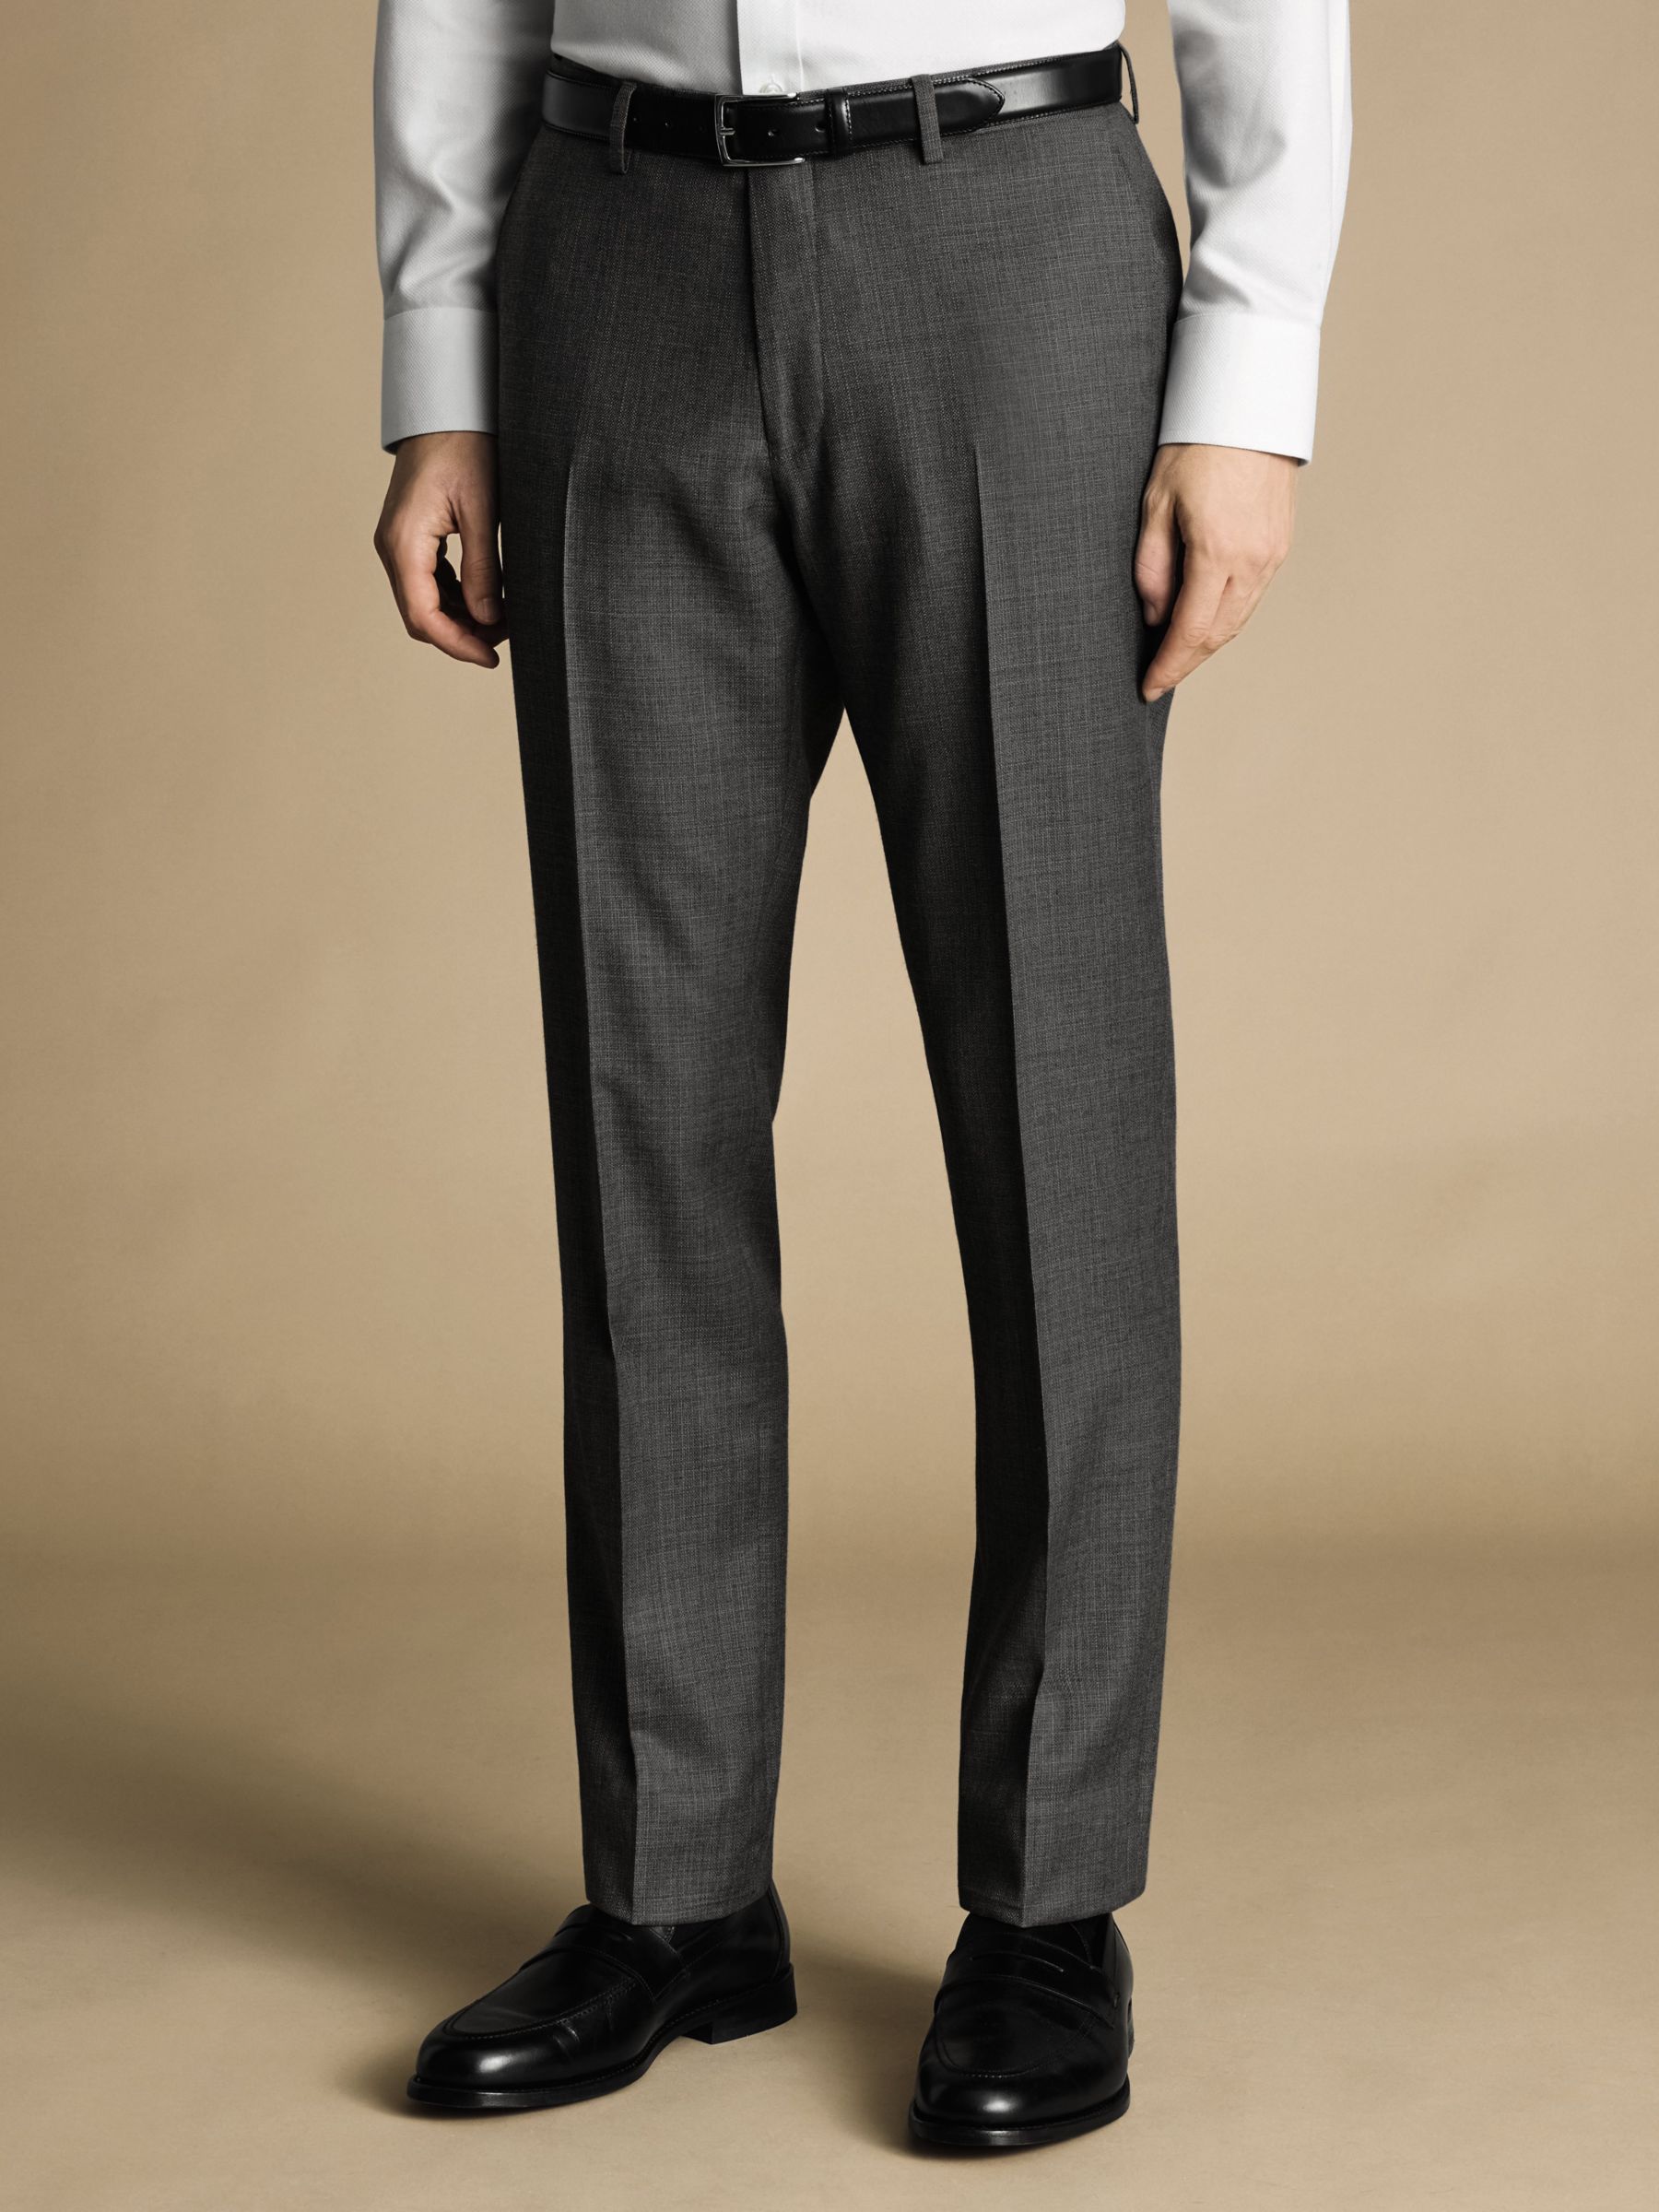 Charles Tyrwhitt Slim Fit Italian Luxury Suit Trousers, Grey, W32/L32